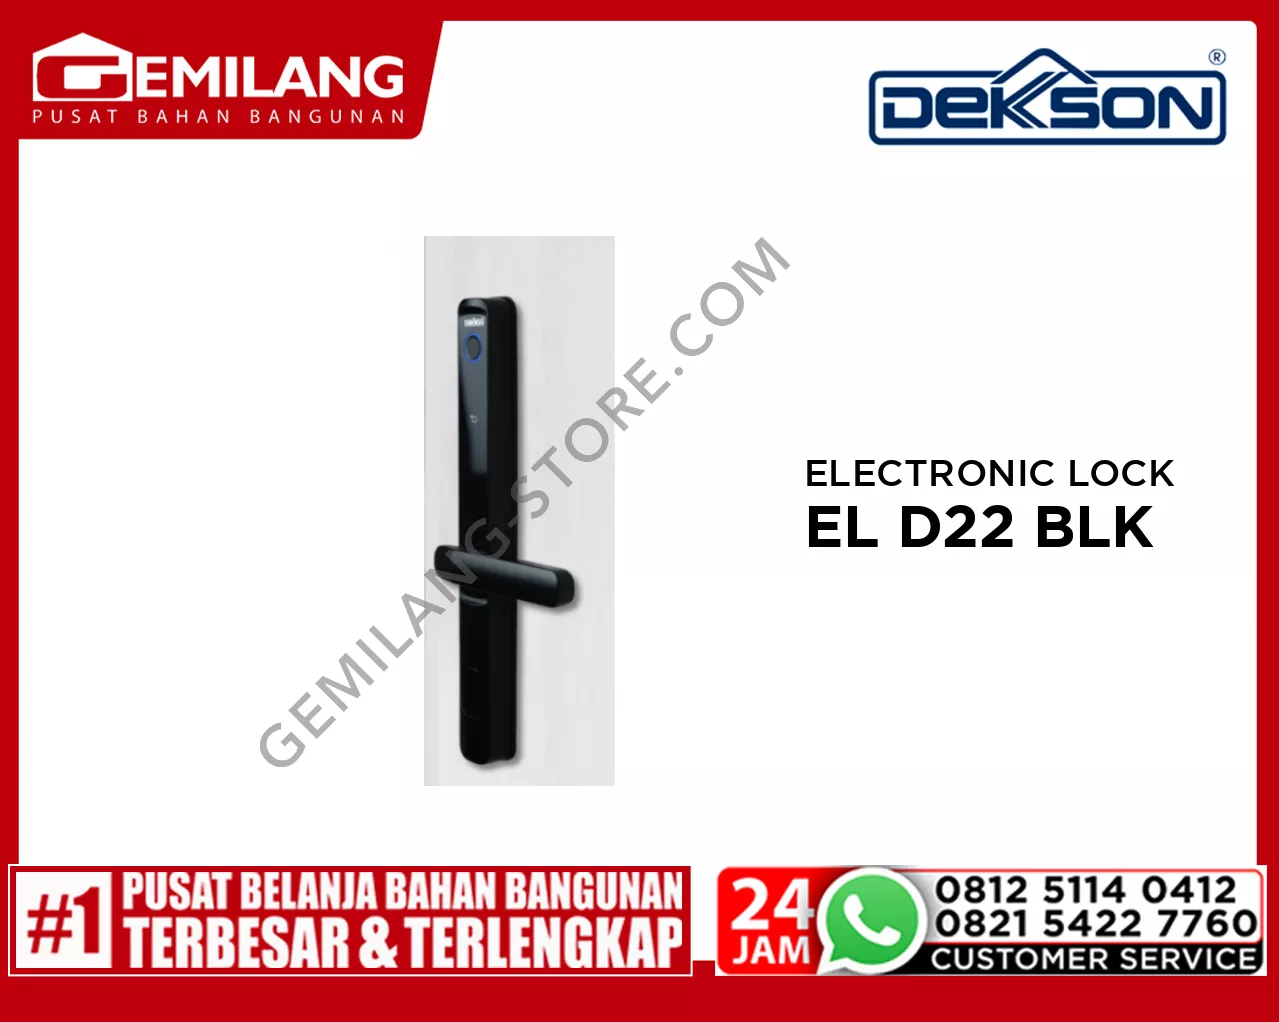 DEKKSON ELECTRONIC LOCK EL D22 BLACK